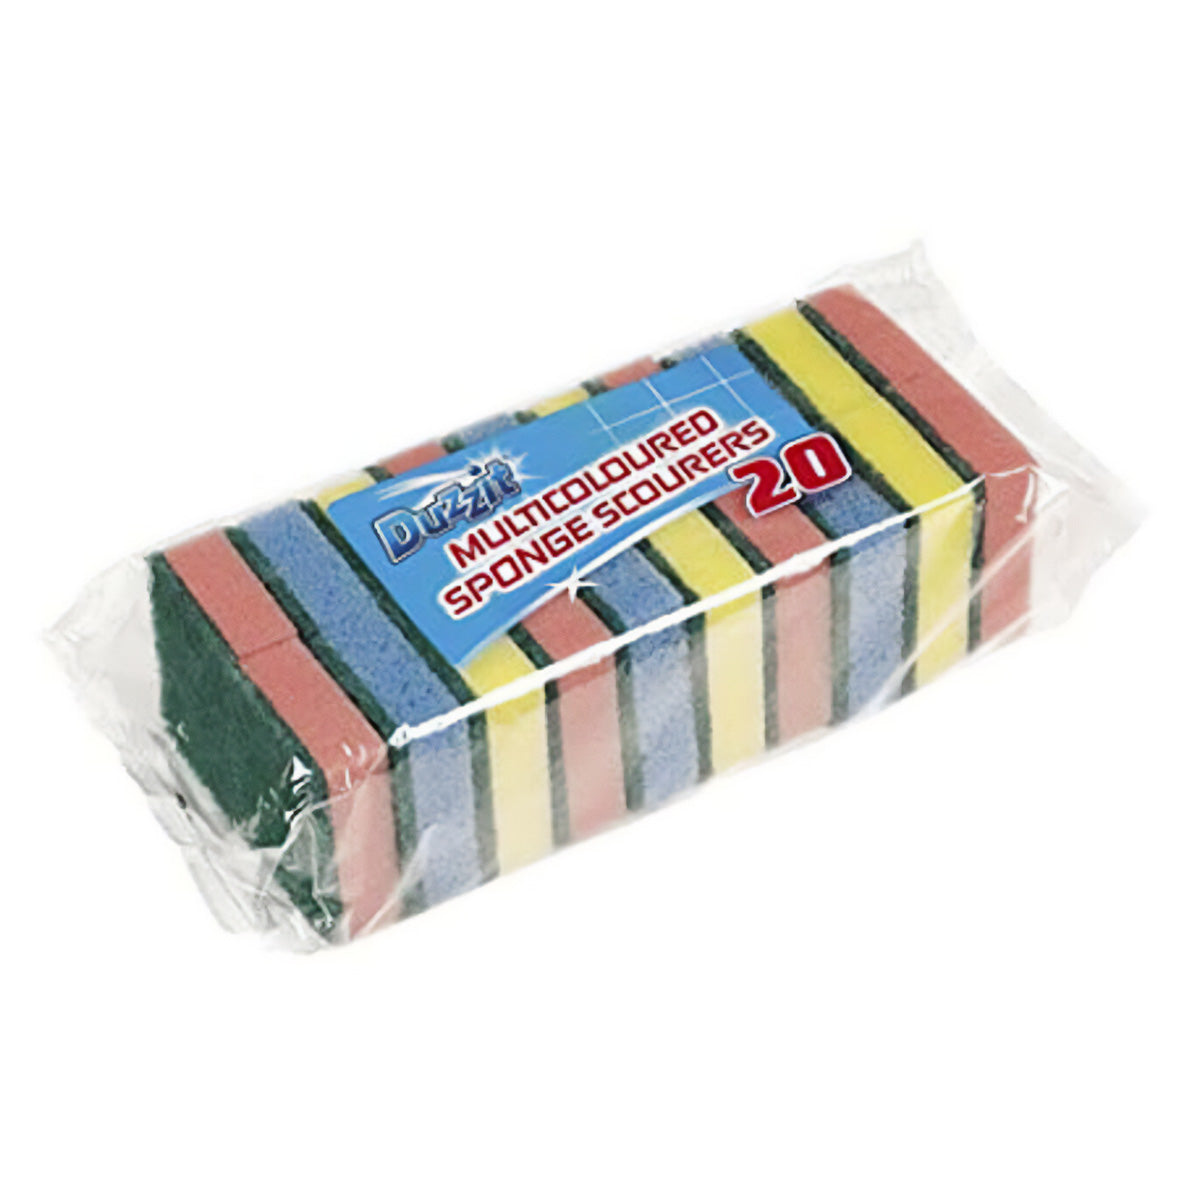 A Duzzit - Multicoloured Sponge Scourers - 20 Pack in a plastic bag.